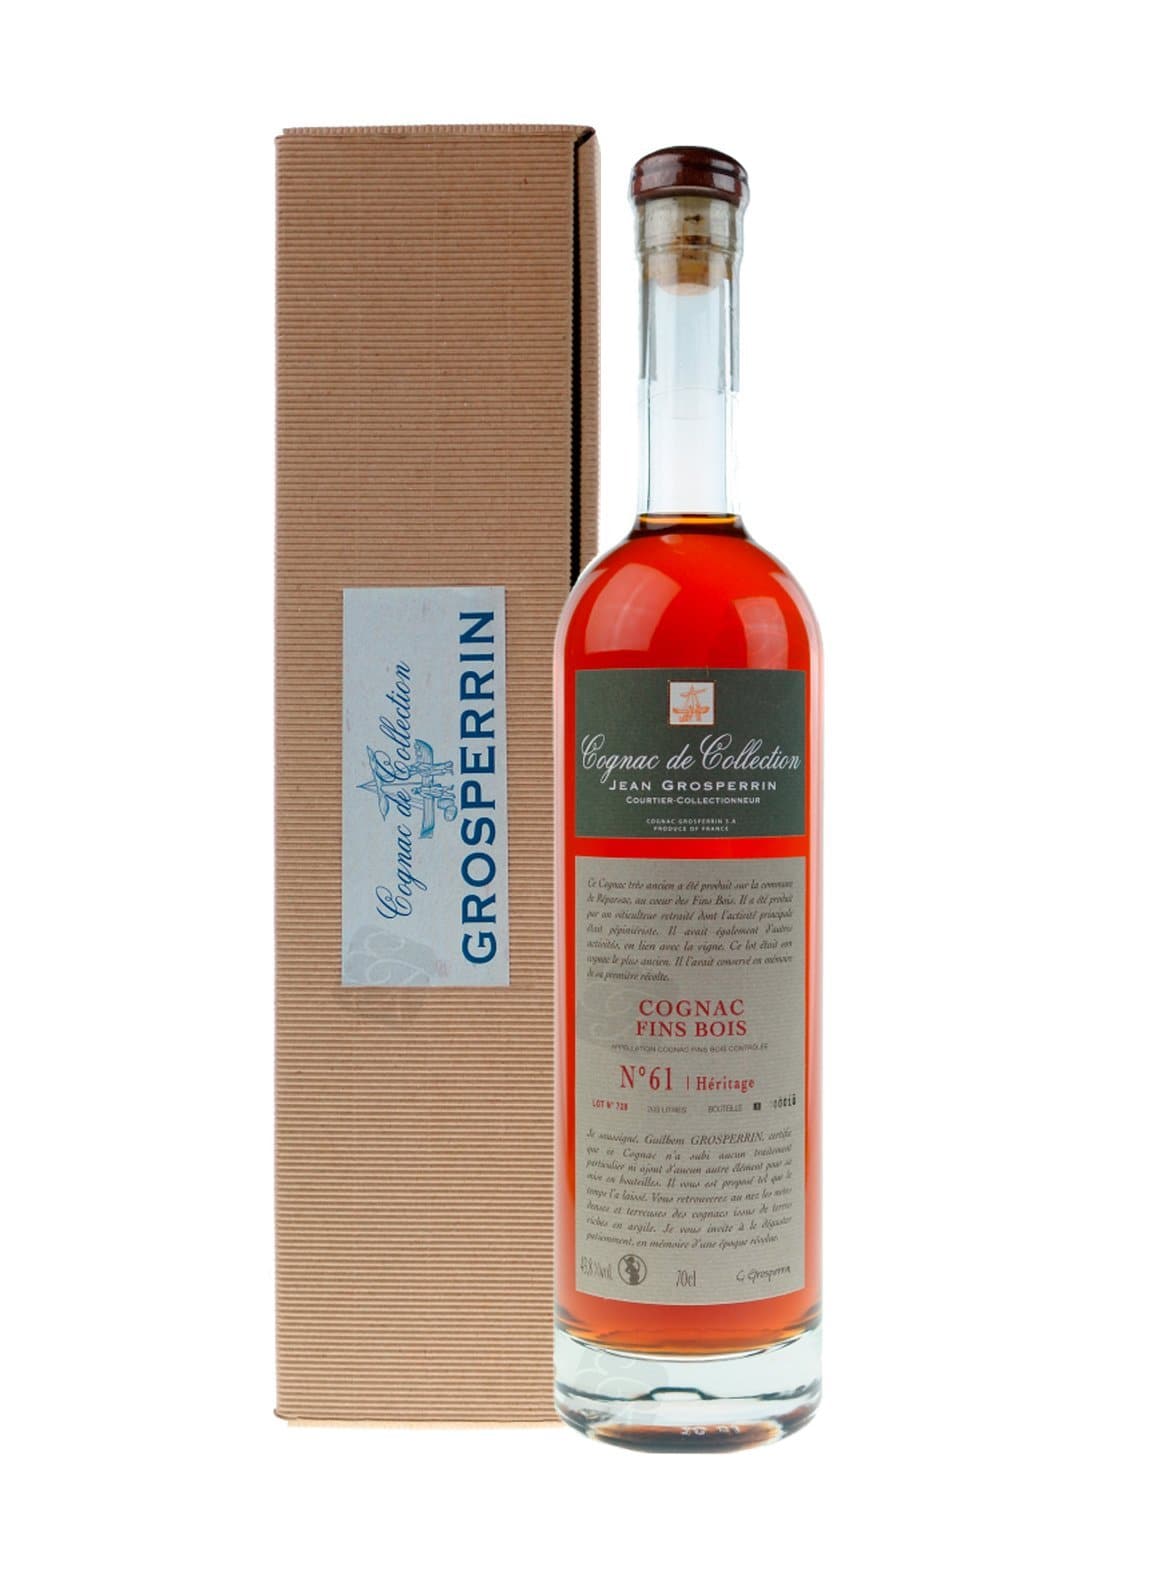 Grosperrin Cognac No. 61 (1961) Fins Bois 43.8% 700ml | Brandy | Shop online at Spirits of France